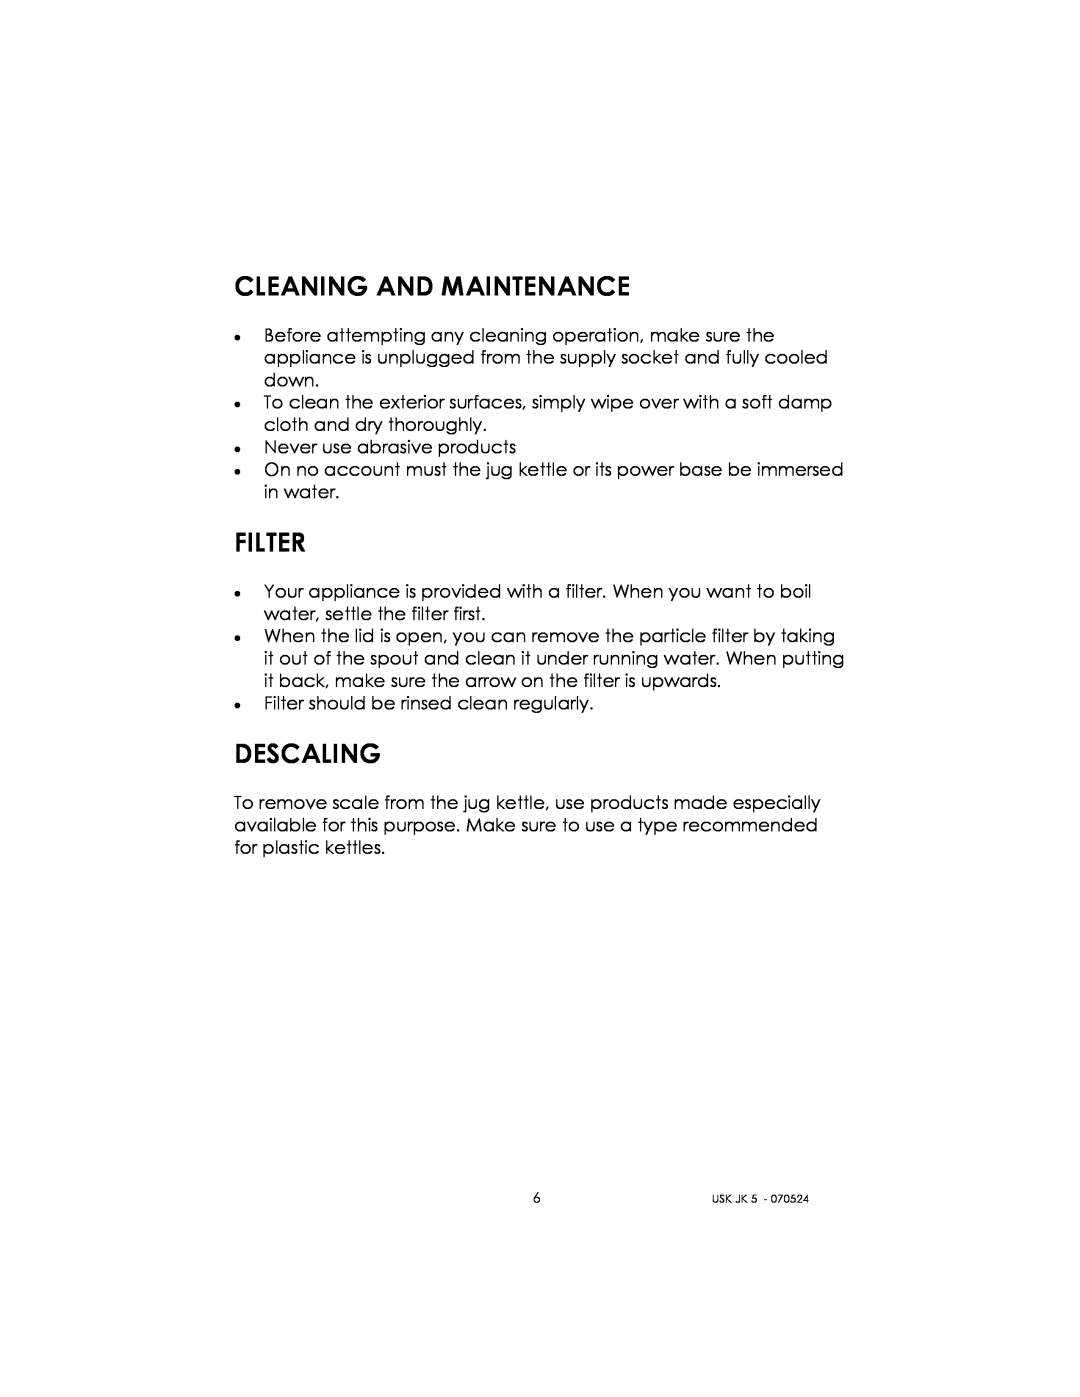 Kalorik USK JK 5 manual Cleaning And Maintenance, Filter, Descaling 